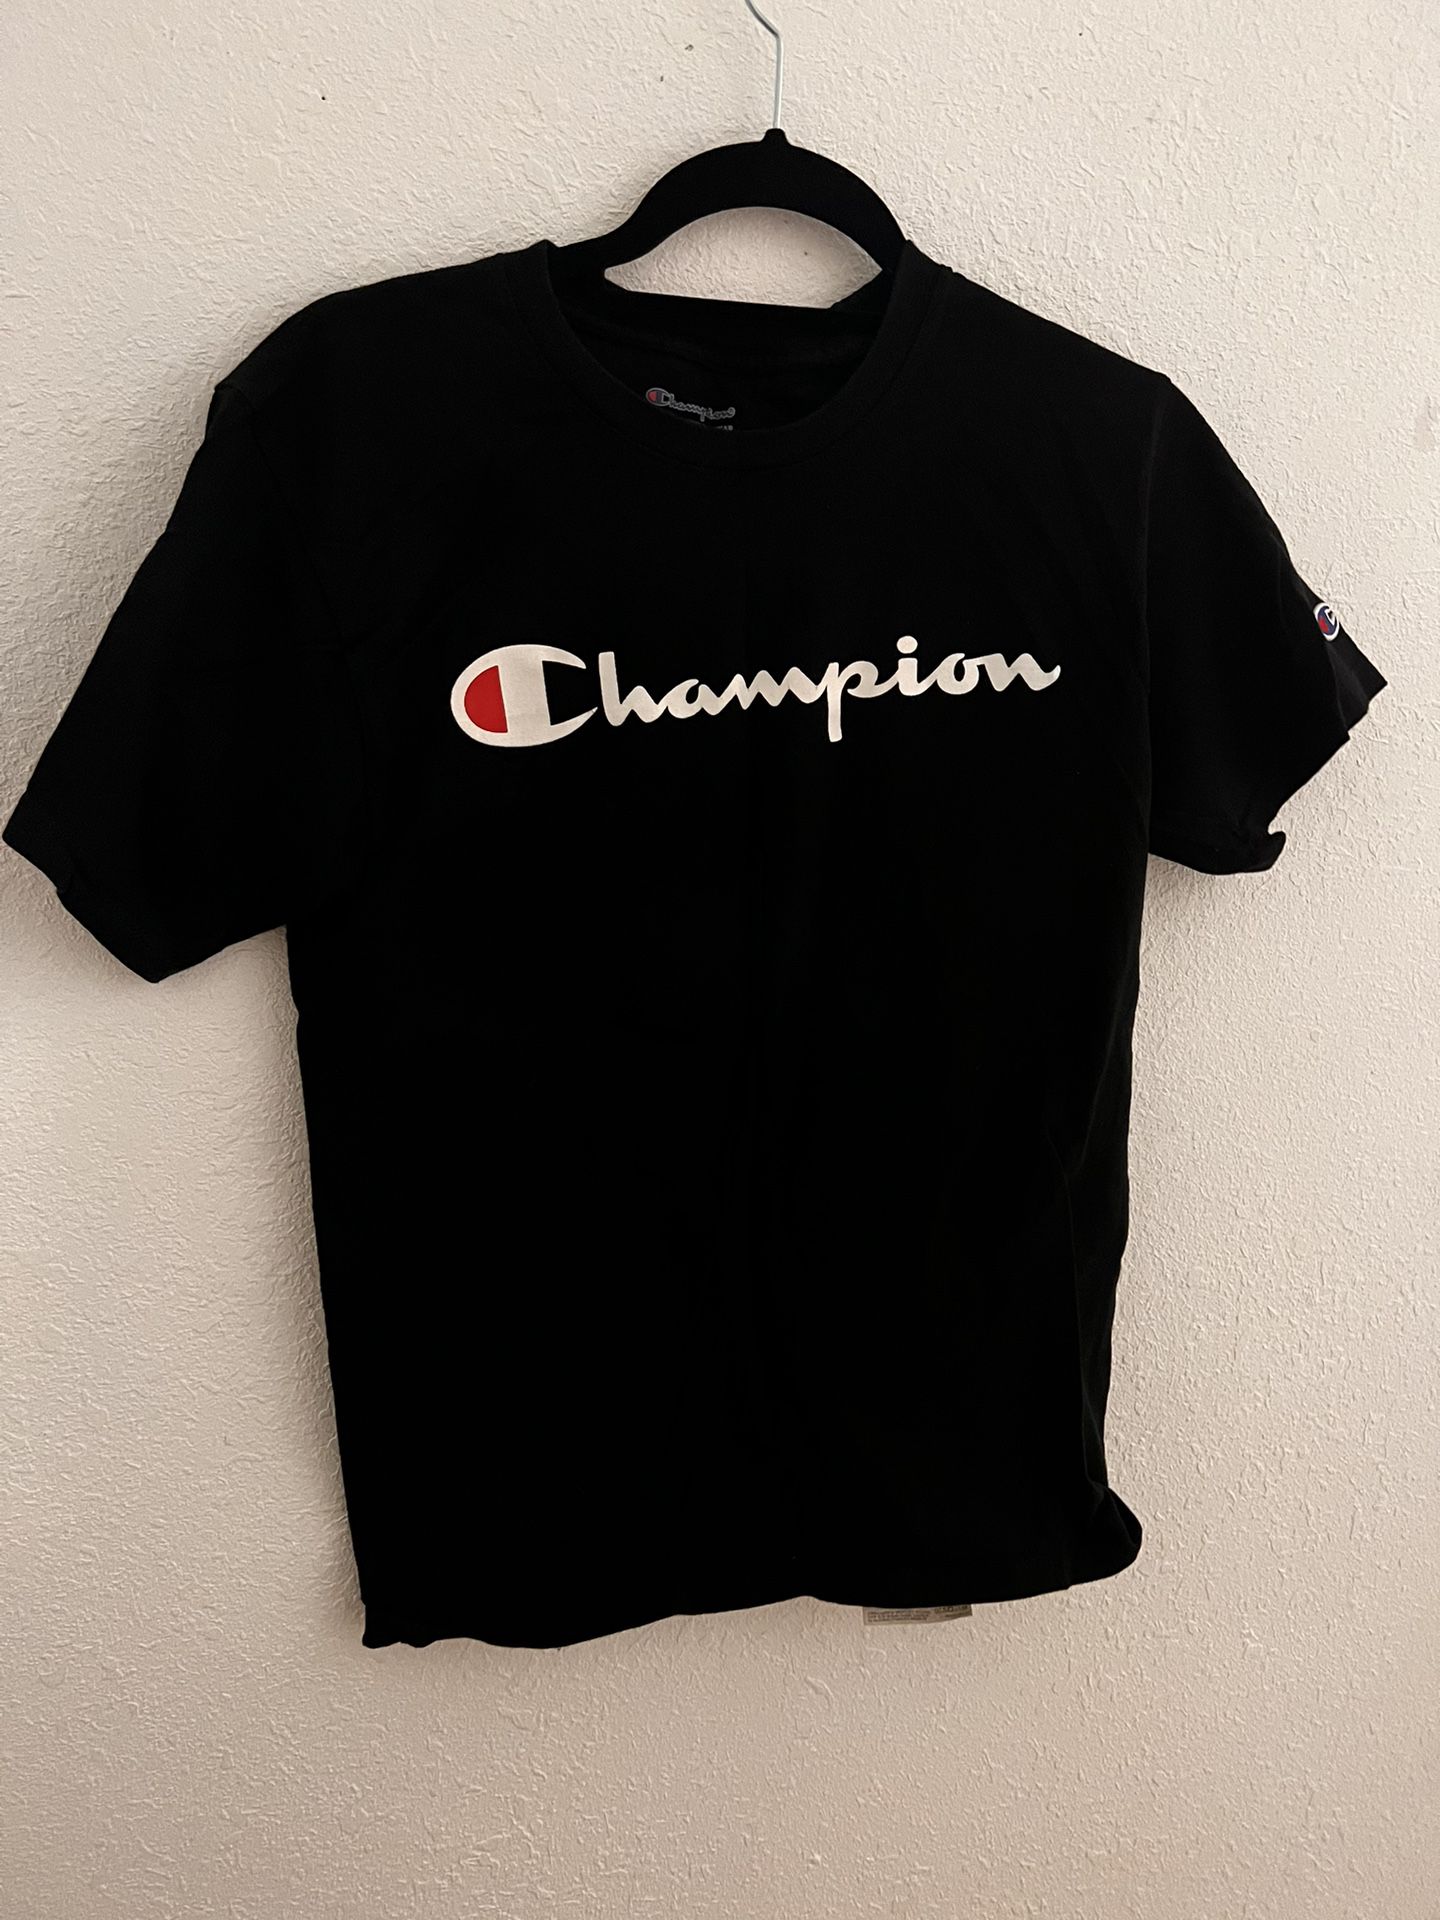 Champion Black Tee Shirt